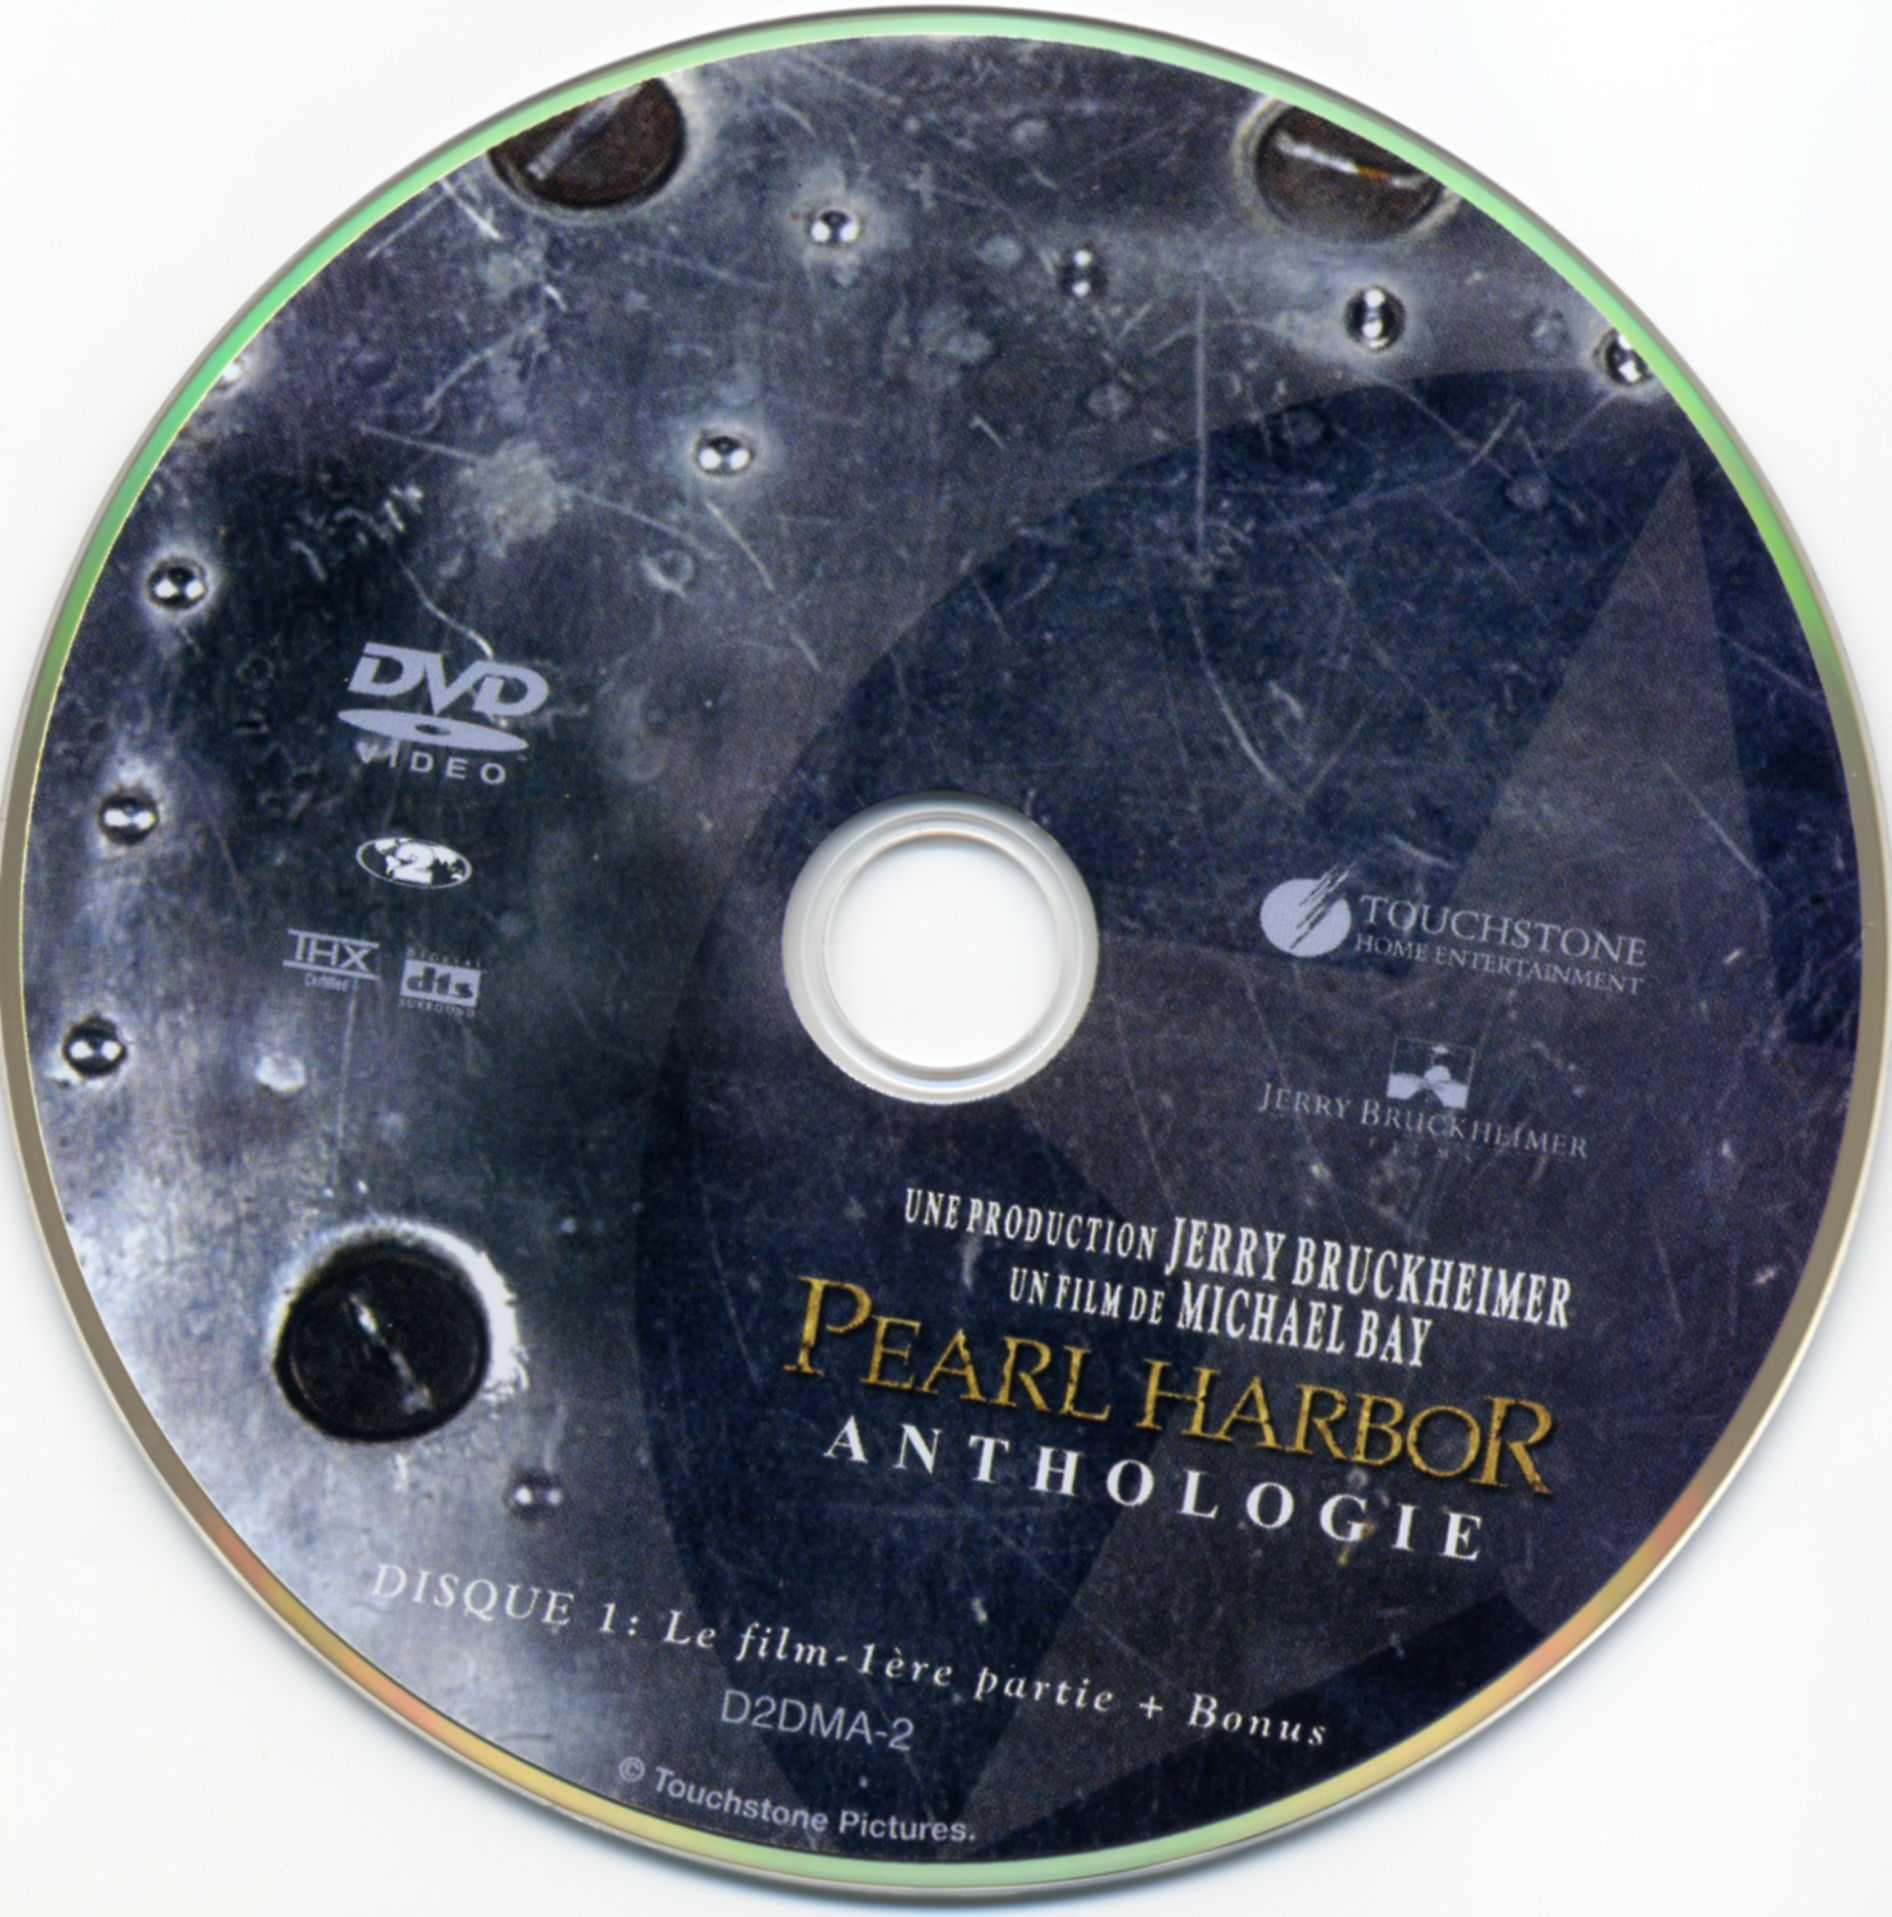 Pearl Harbor Anthologie DISC 1